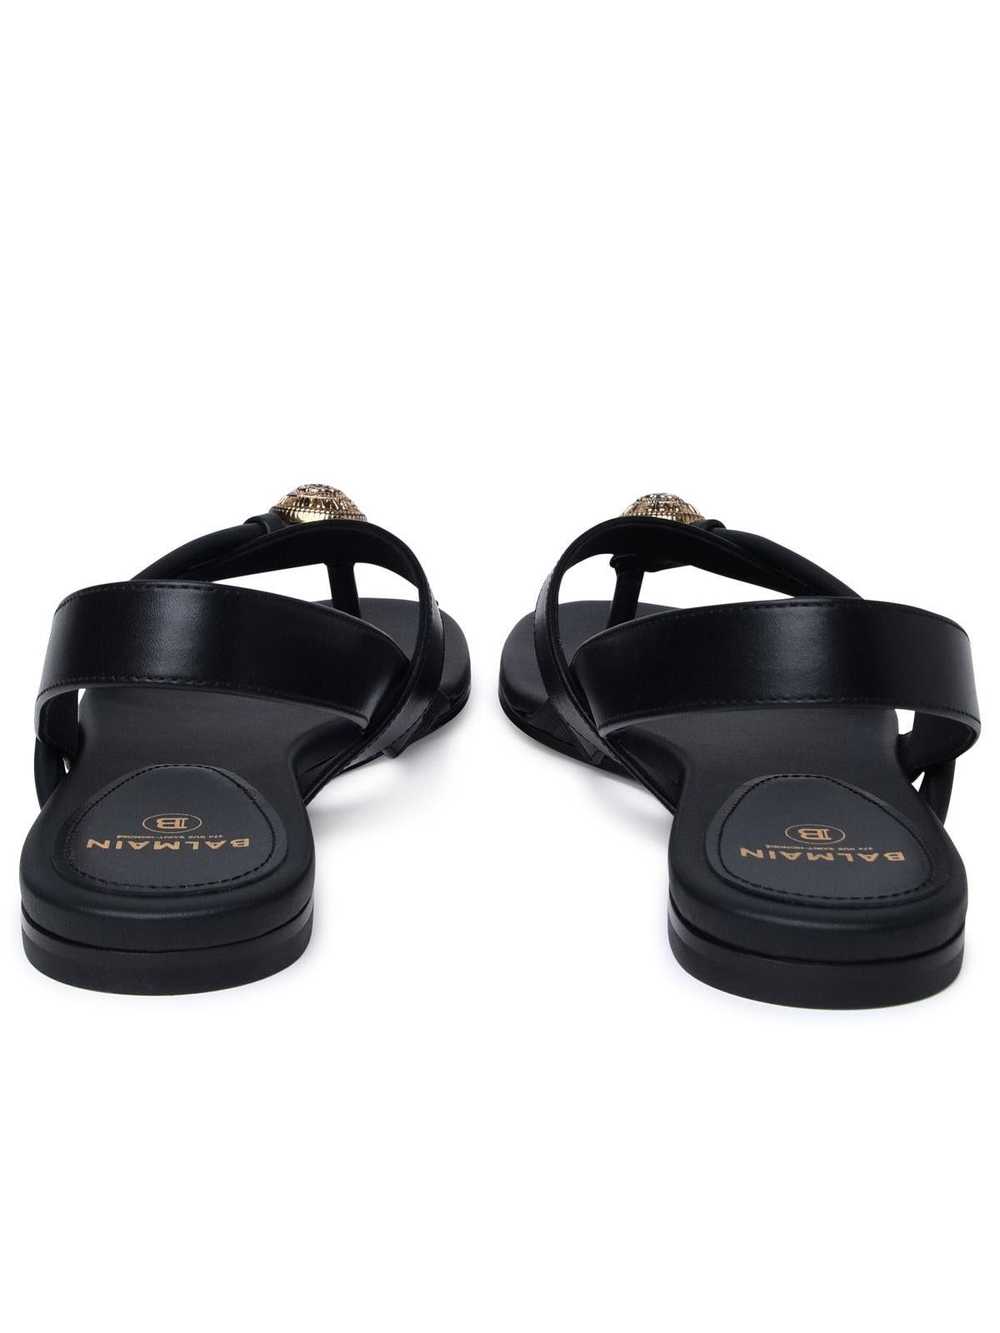 Balmain Balmain Black Leather Sandals - image 4